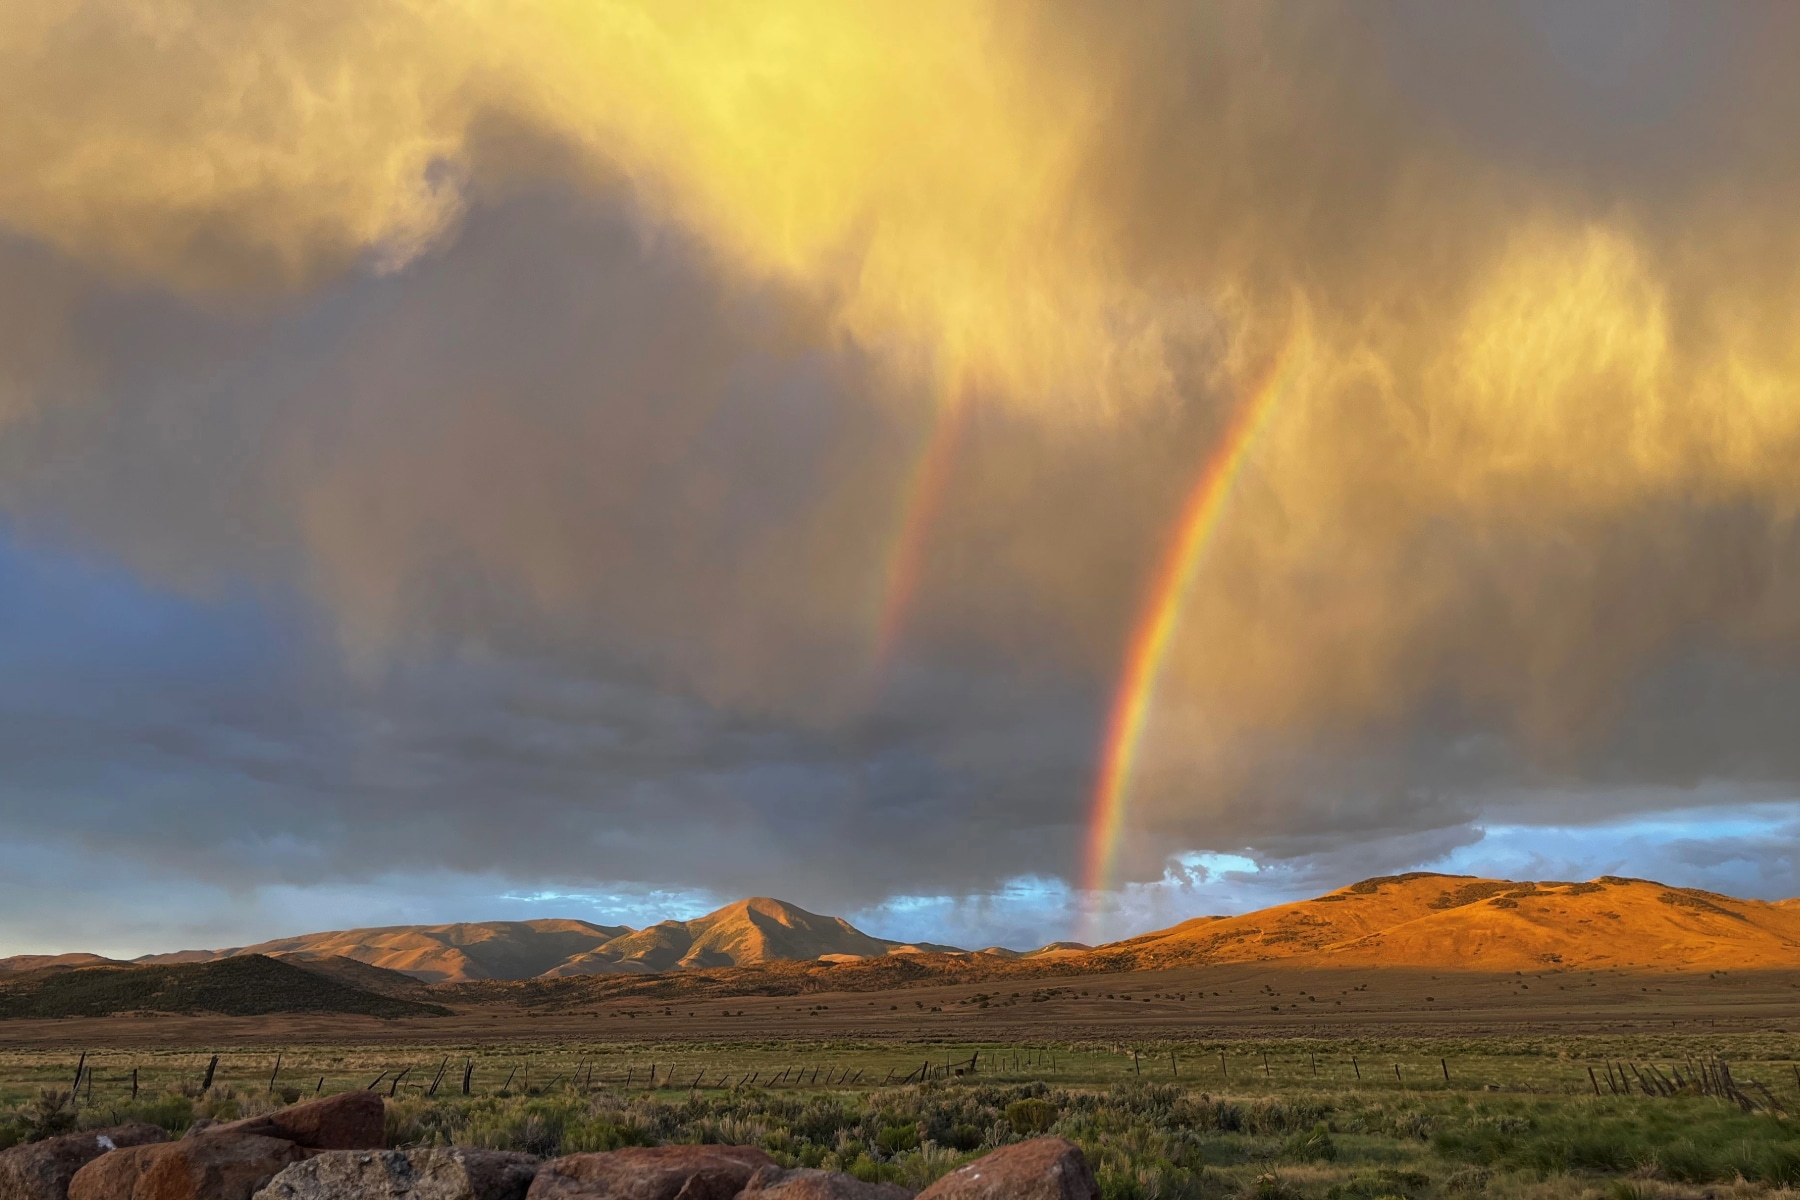 Rainbow over the desert terrain in Nevada wilderness.